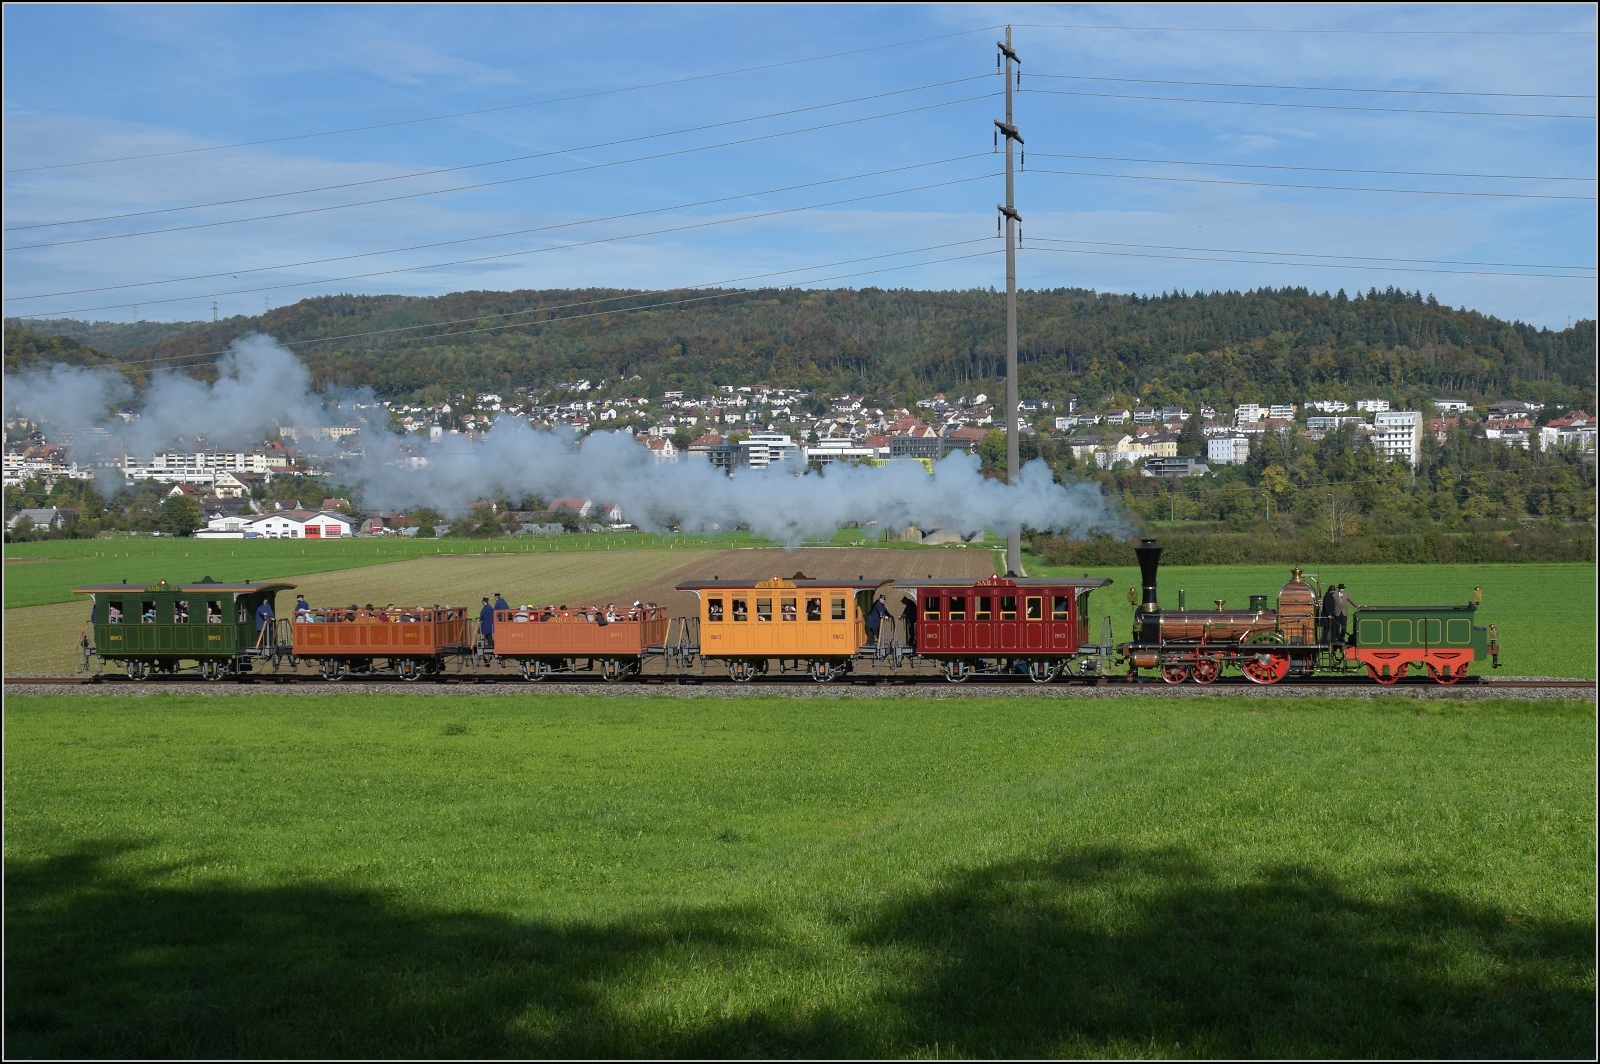 Spanisch-Brötli-Bahn zum 175. Geburtstag.

Felsenau, Oktober 2022.